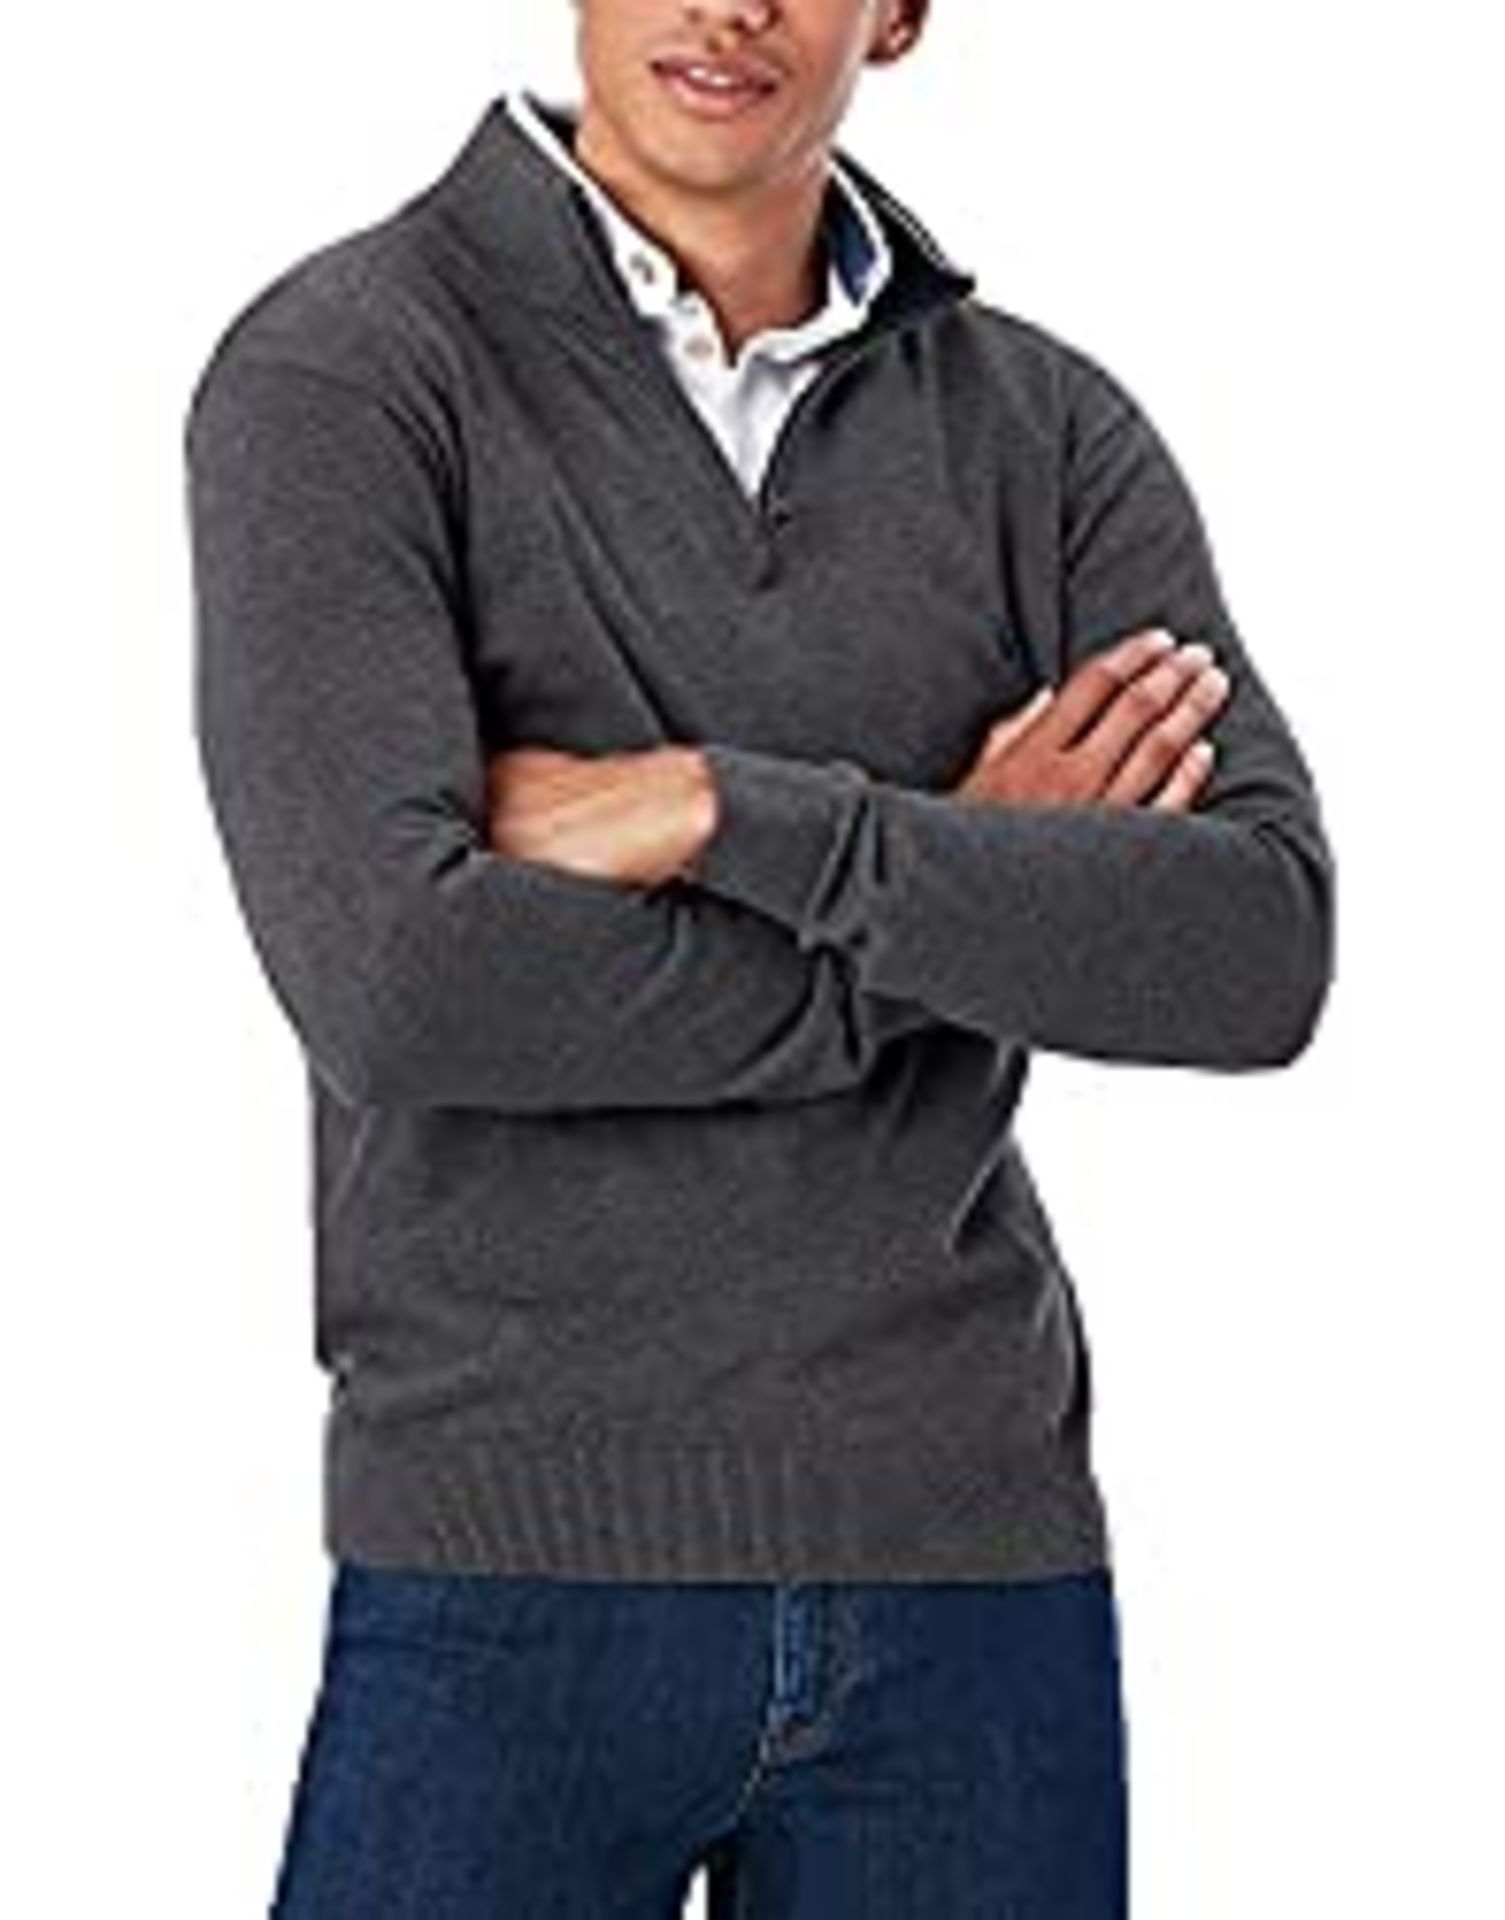 RRP £44.96 Joules Men's Hillside Sweatshirt, Grey Marl, L